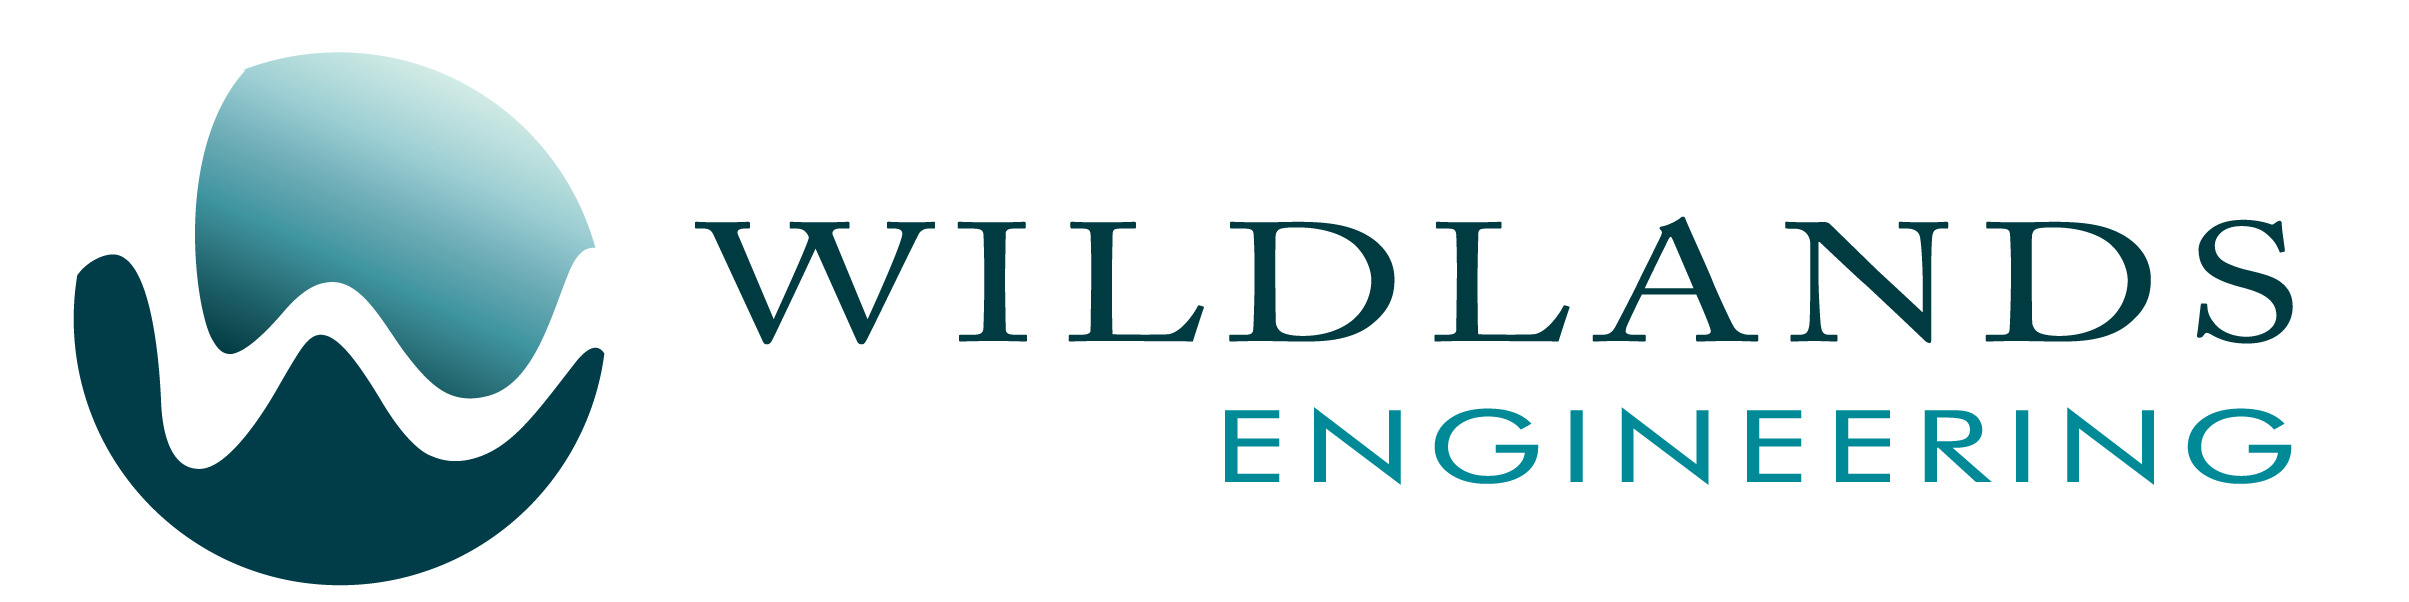 Wildlands Engineering Seeks AutoCAD Technician/Civil Designer